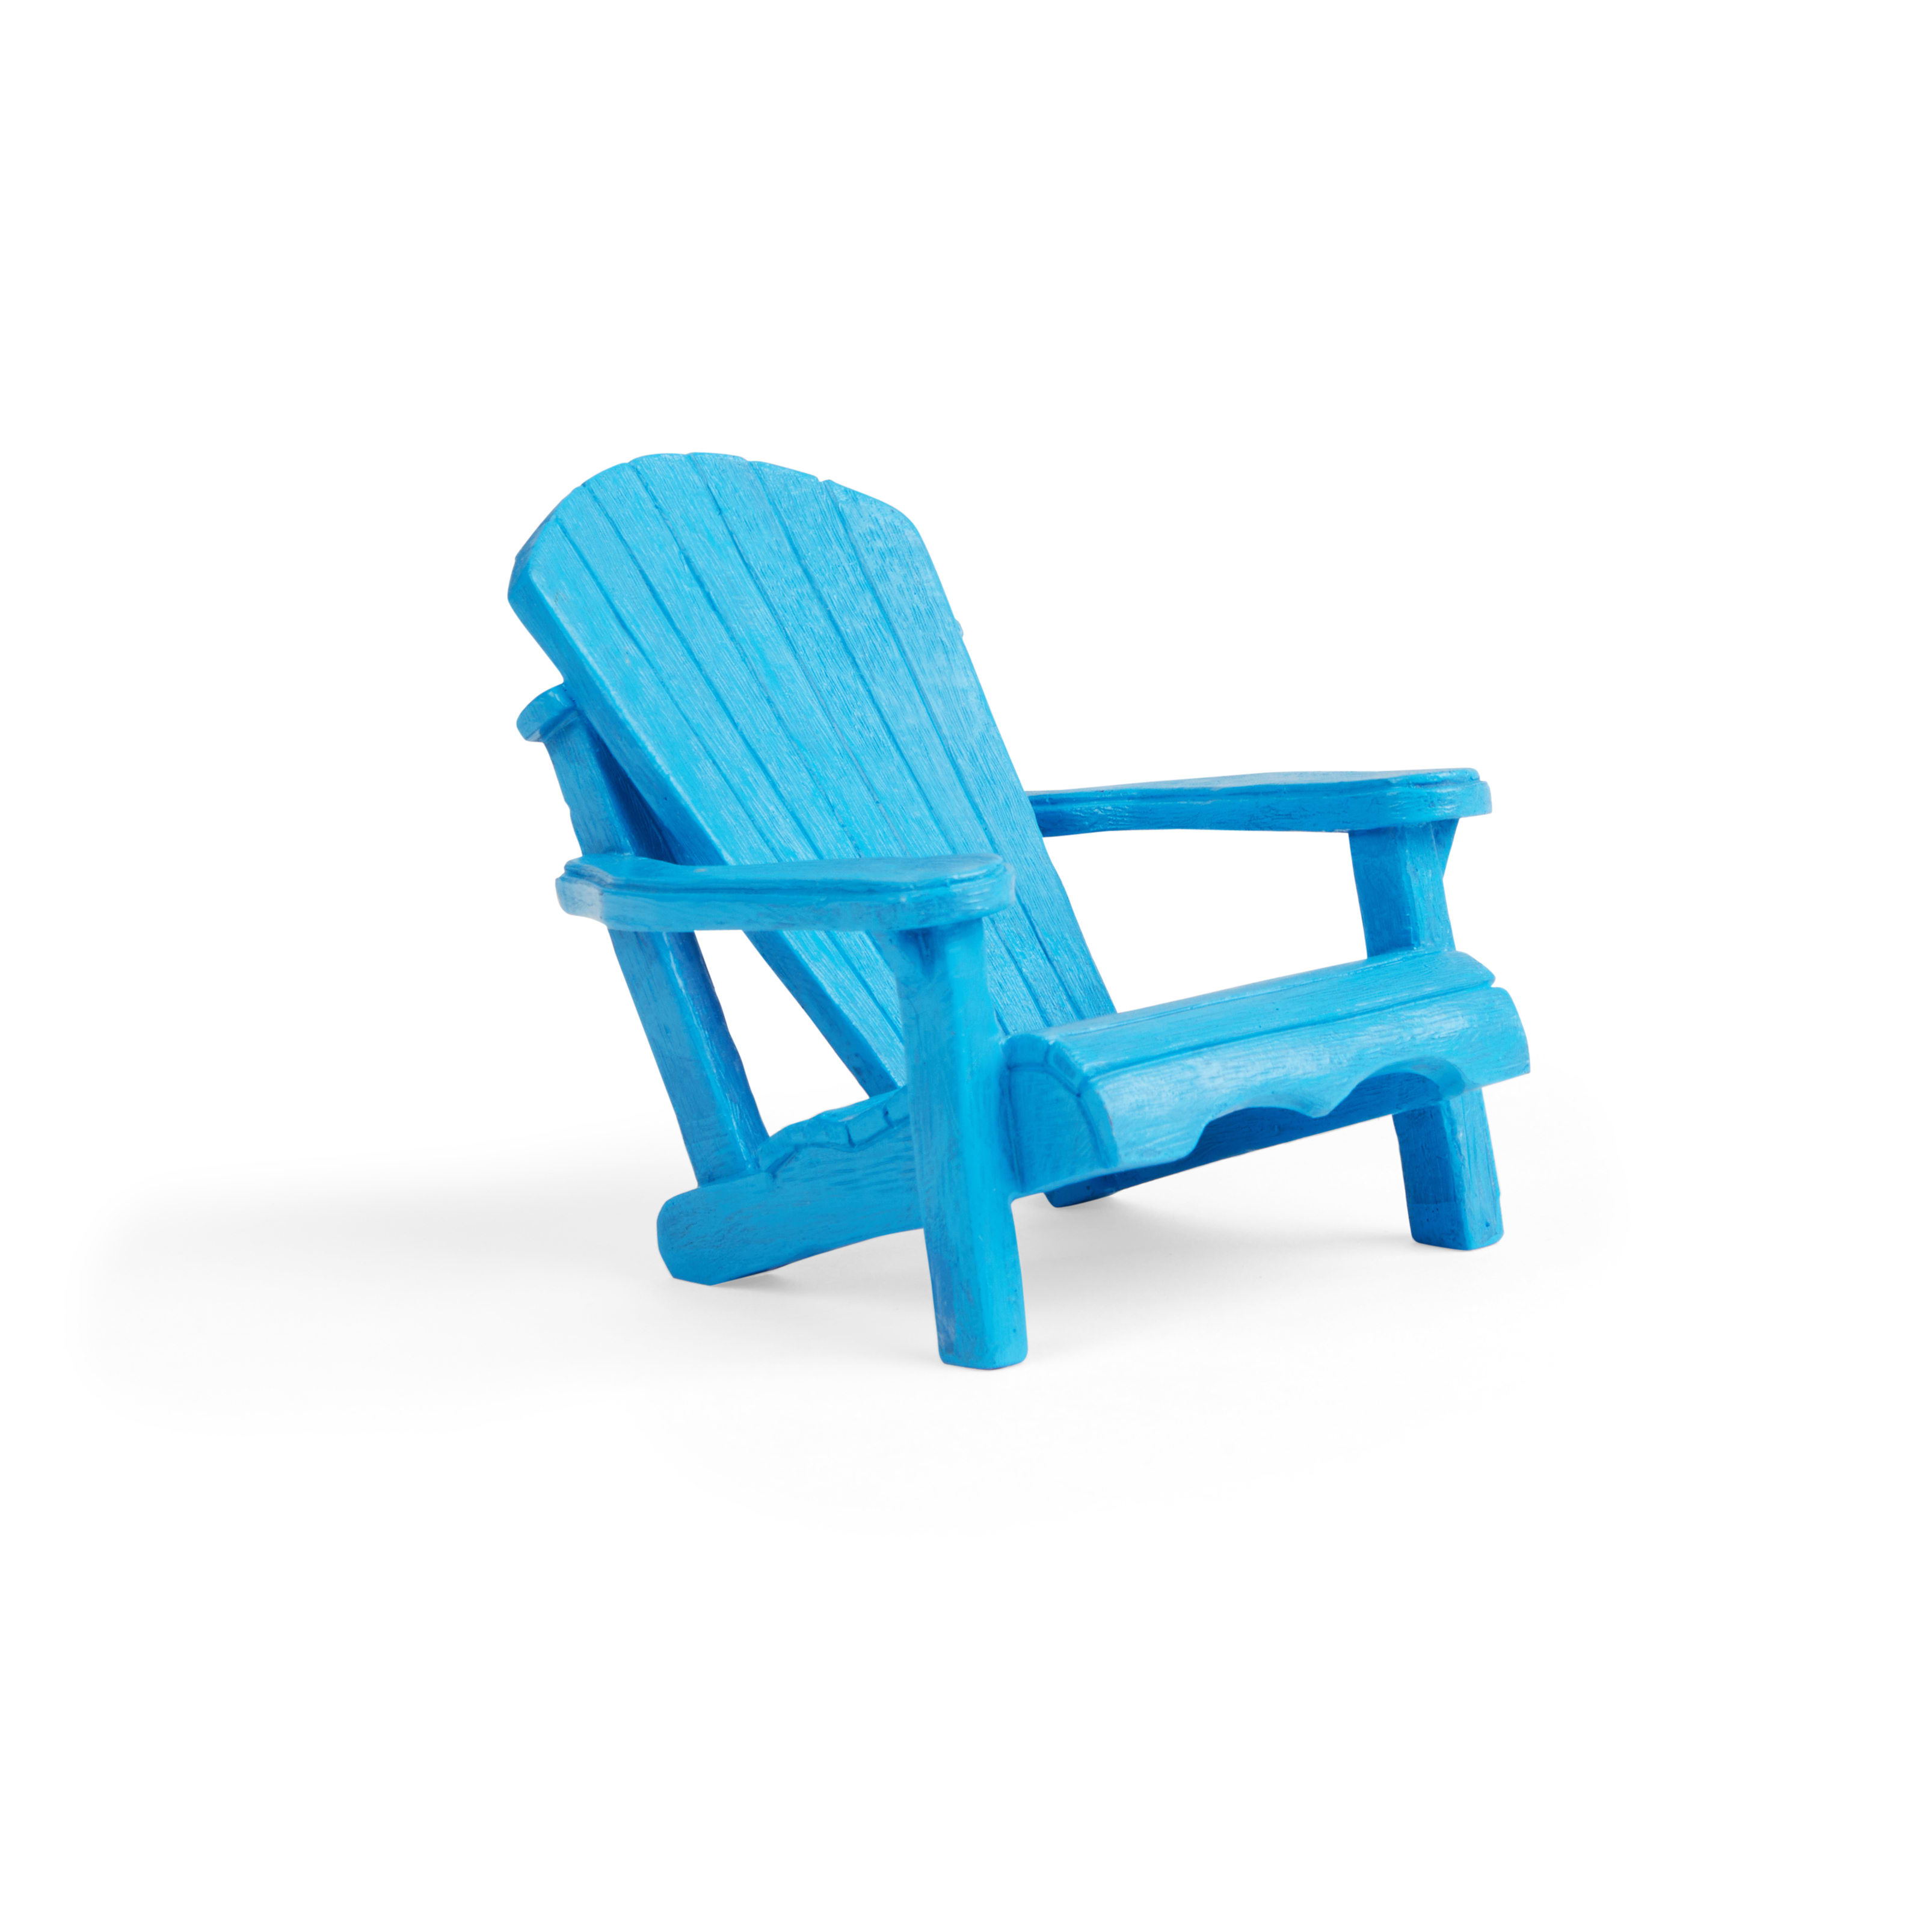 Small Blue Adirondack Chair Plastic 